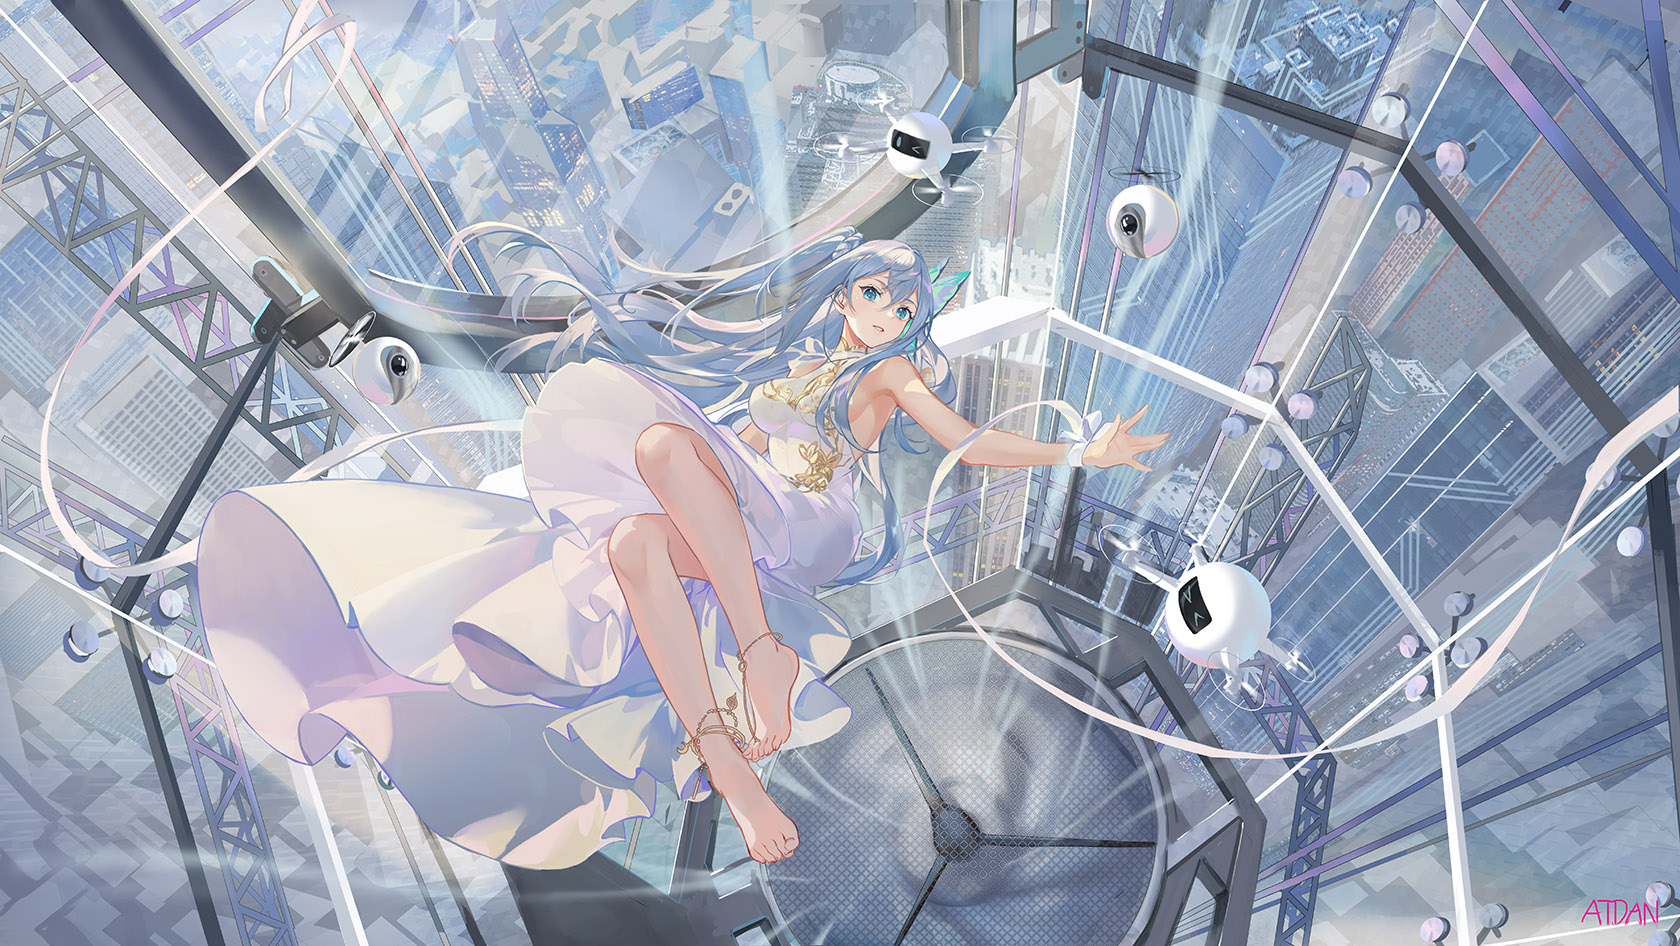 Anime 1680x946 anime anime girls digital art artwork 2D portrait Atdan Synthesizer v falling blue hair blue eyes dress white dress barefoot floating sideboob